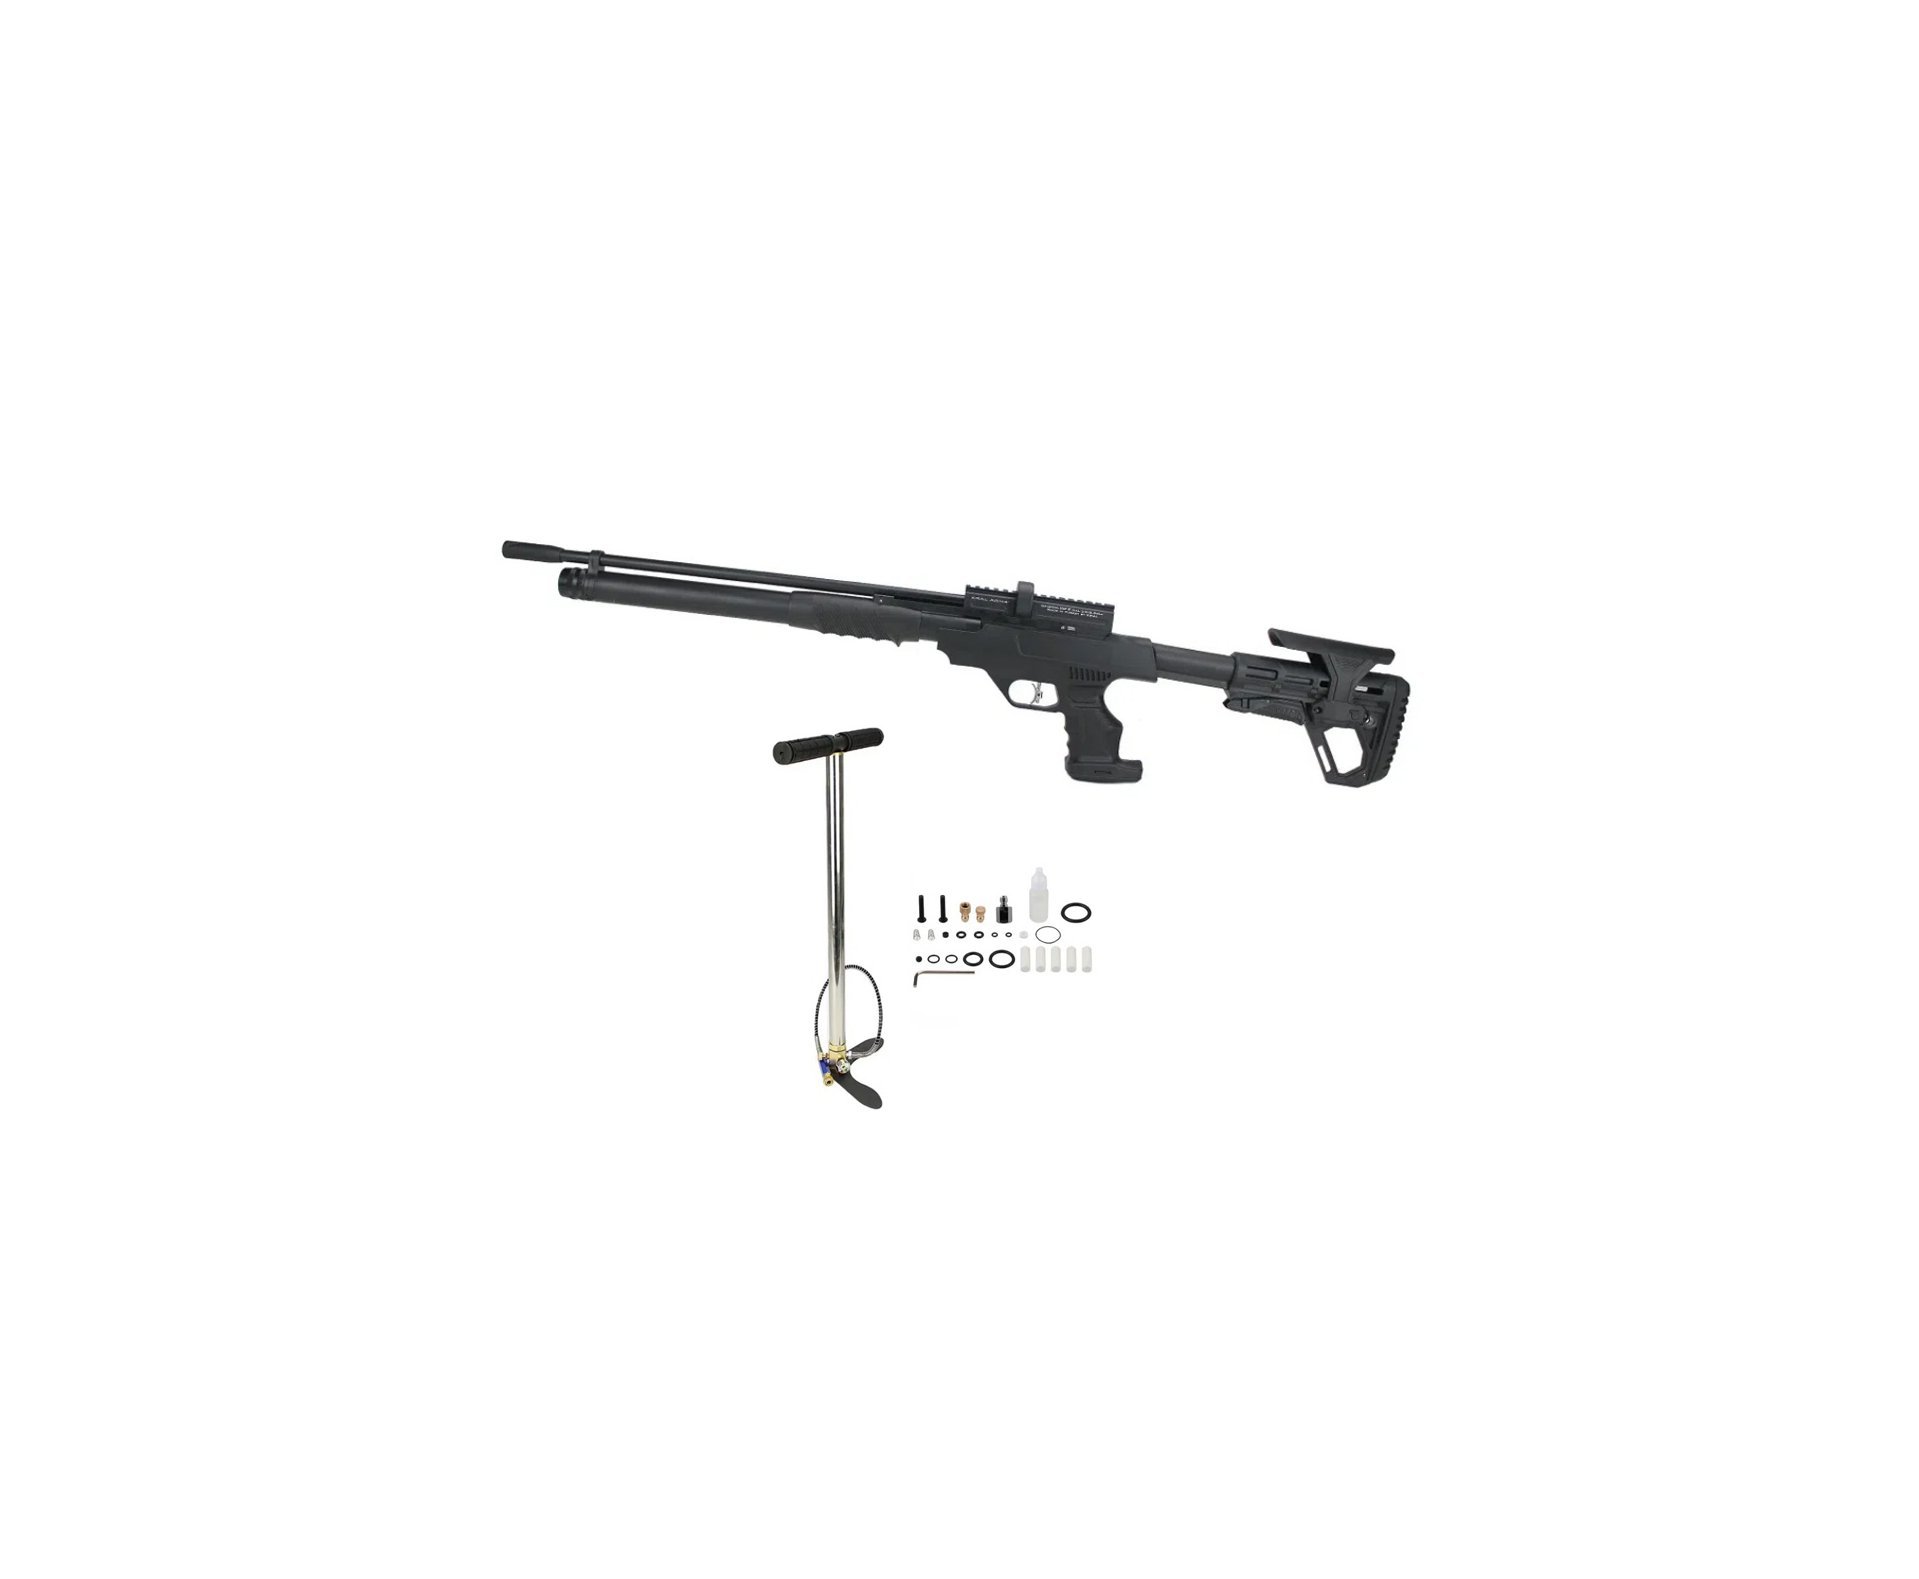 Carabina de Pressão PCP Puncher Rambo S. Black 5.5mm - Kral Arms + Bomba PCP